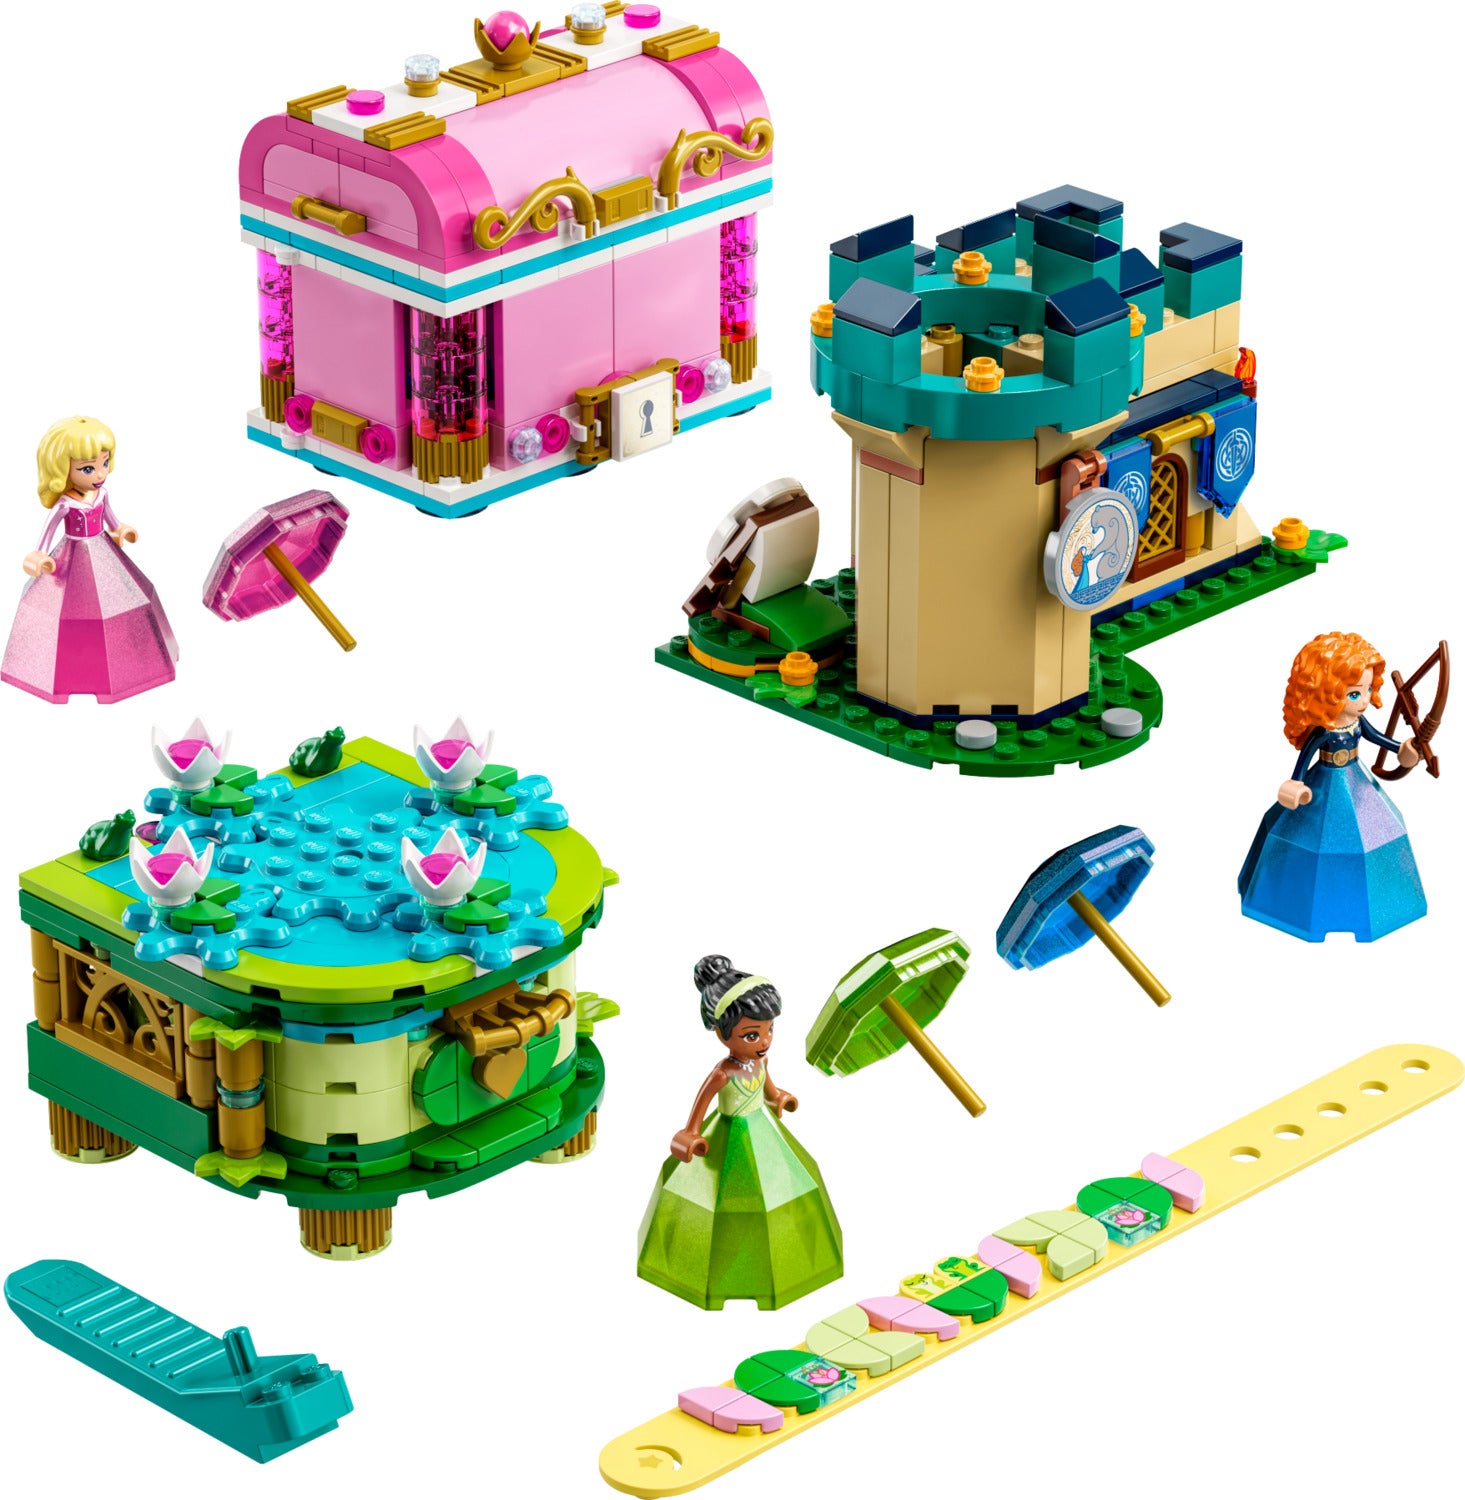 LEGO® Disney: Aurora, Merida and Tiana's Enchanted Creations